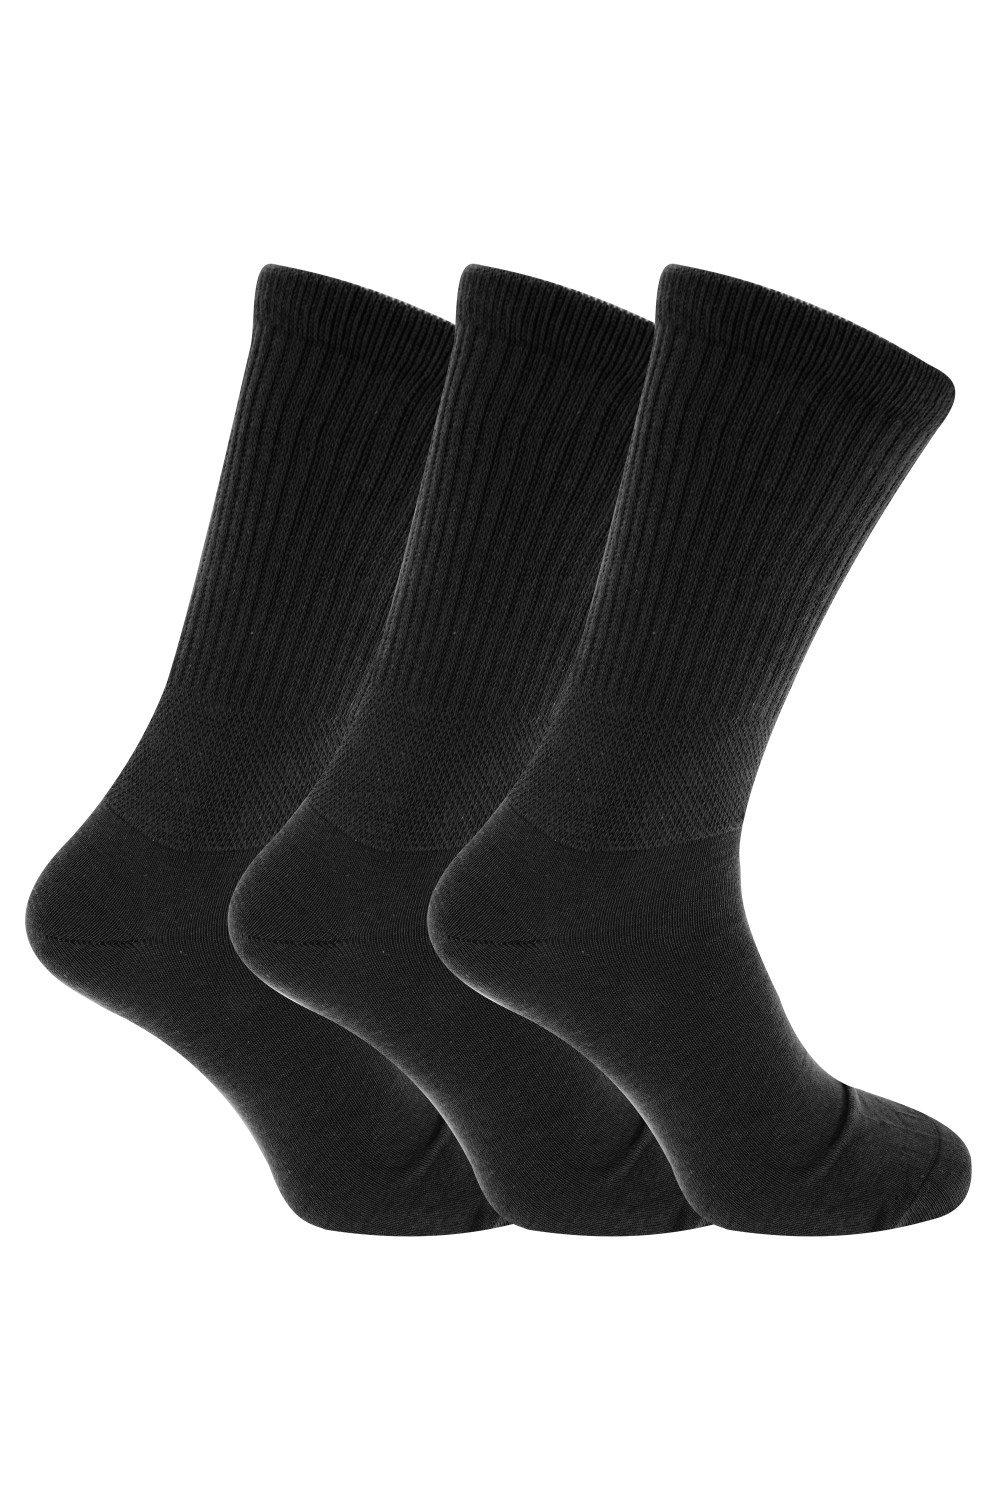 Extra Wide Comfort Fit Wide Feet Diabetic Socks (3 Pairs)